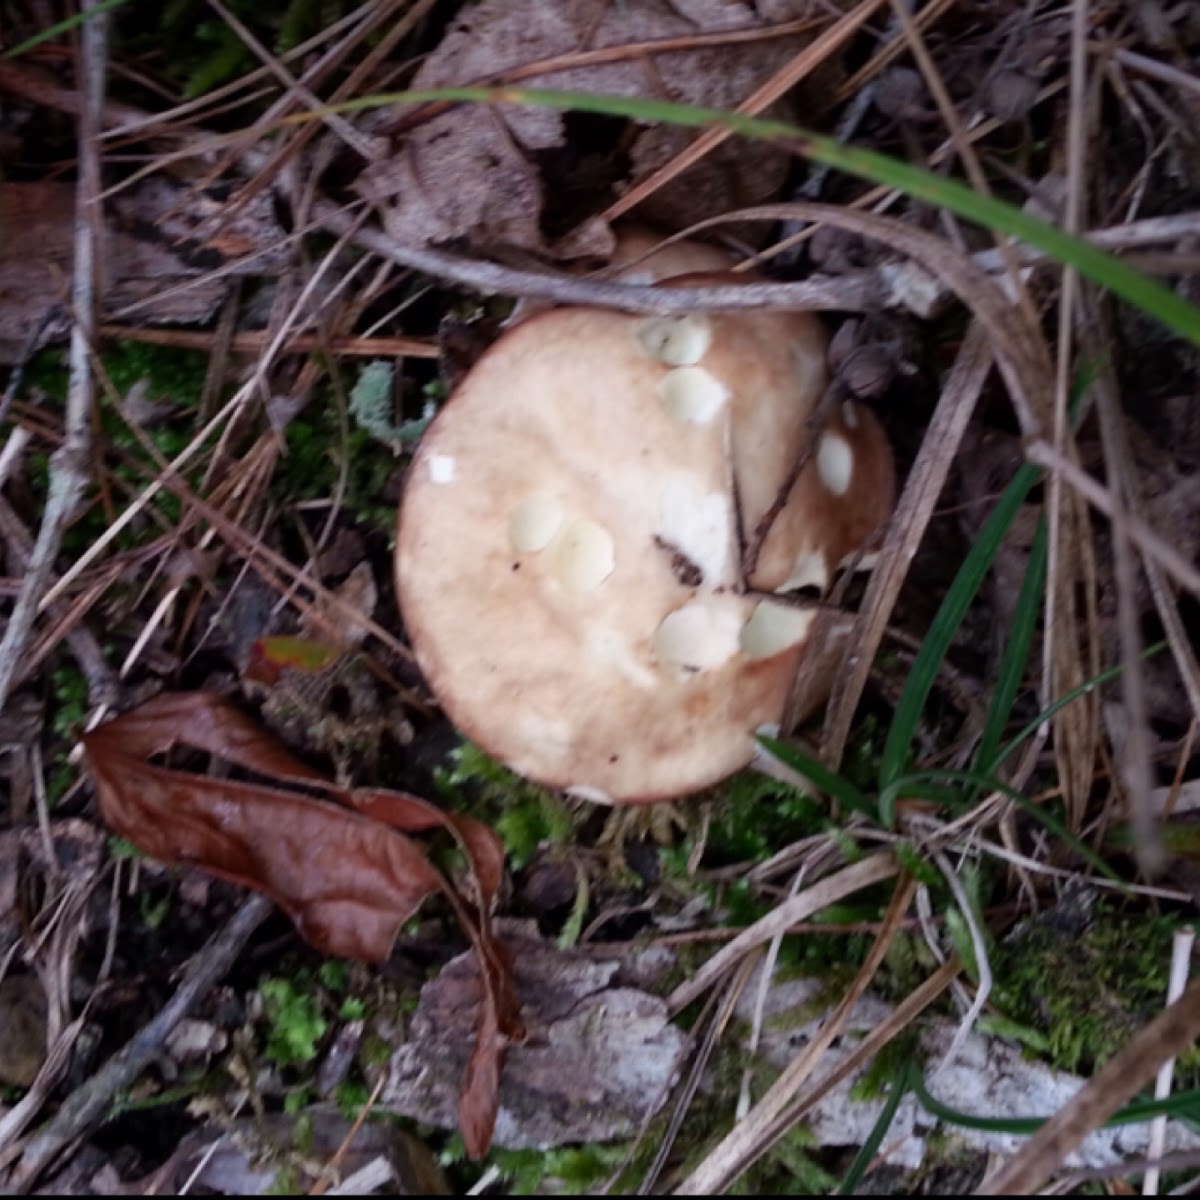 WhiteTop Mushroom